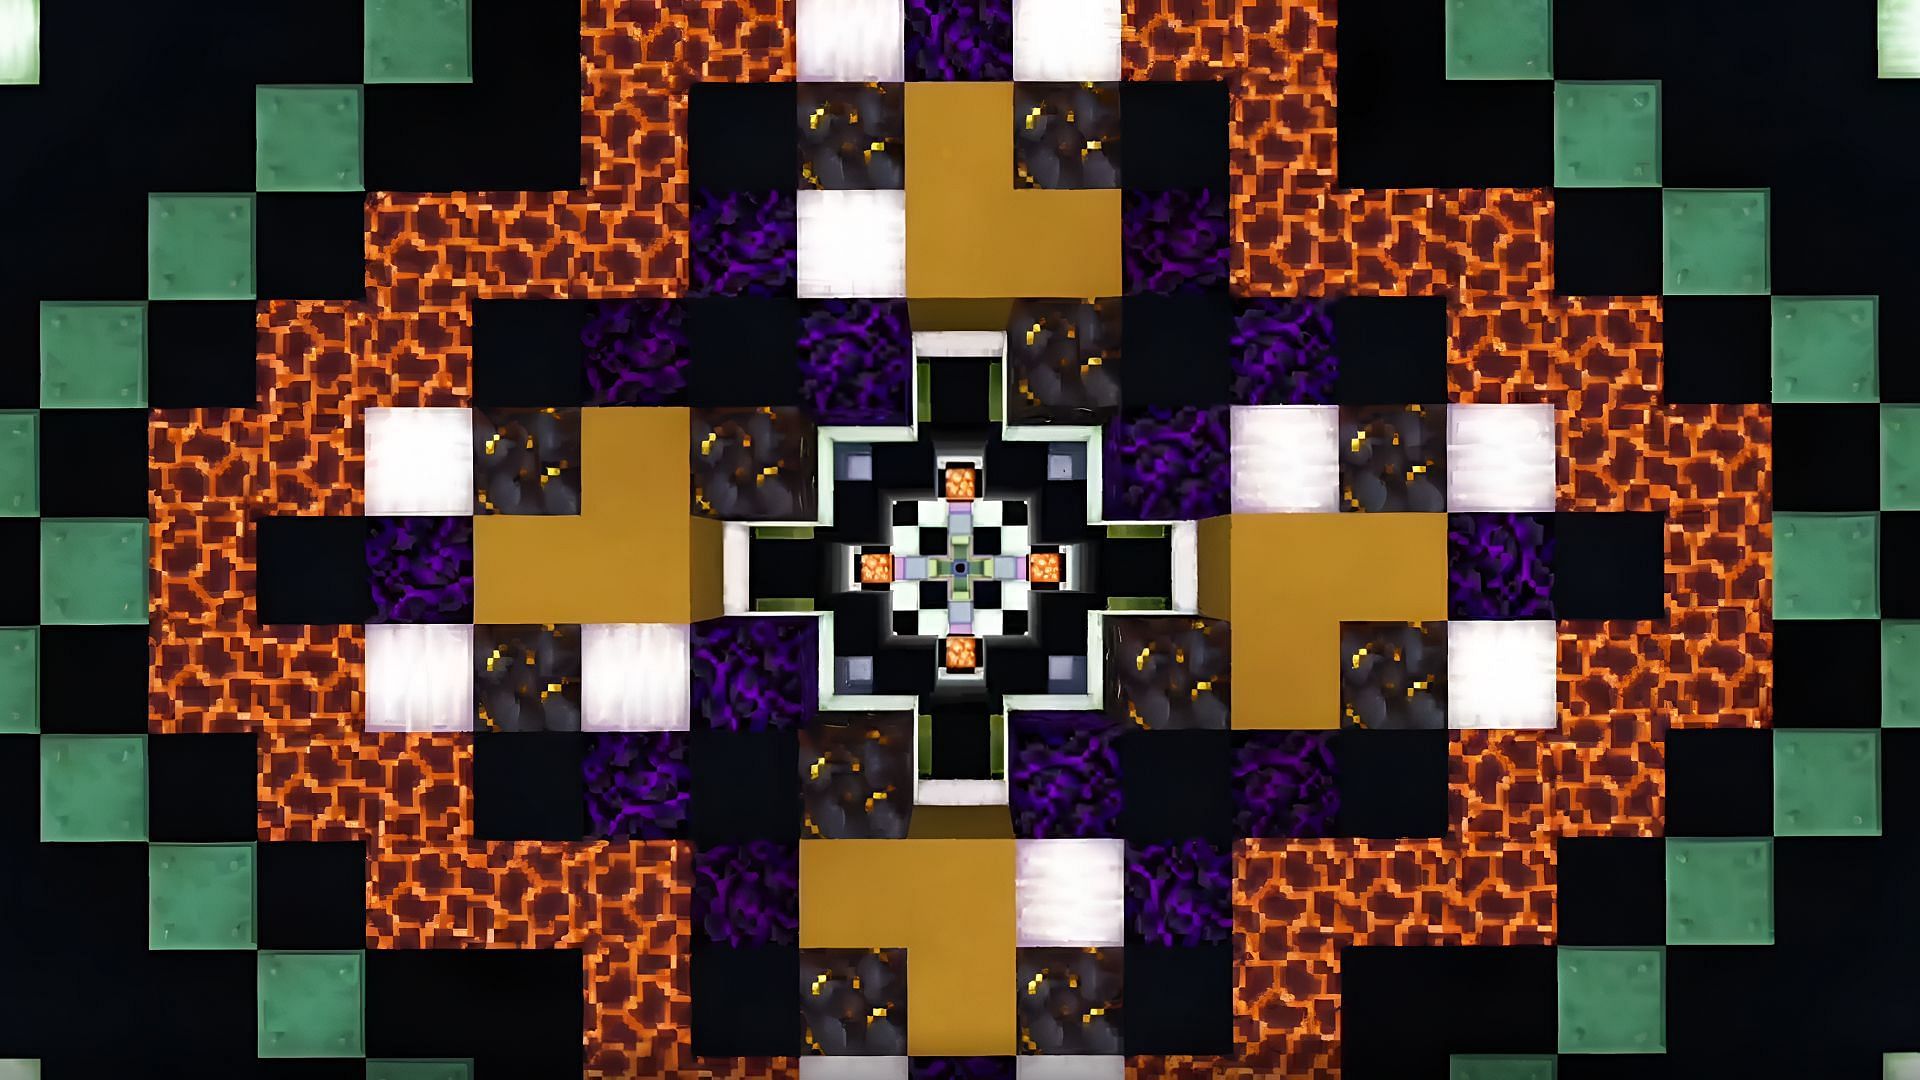 A kaleidoscope build shared by Minecraft player Shot-Grass-4503 on Reddit.